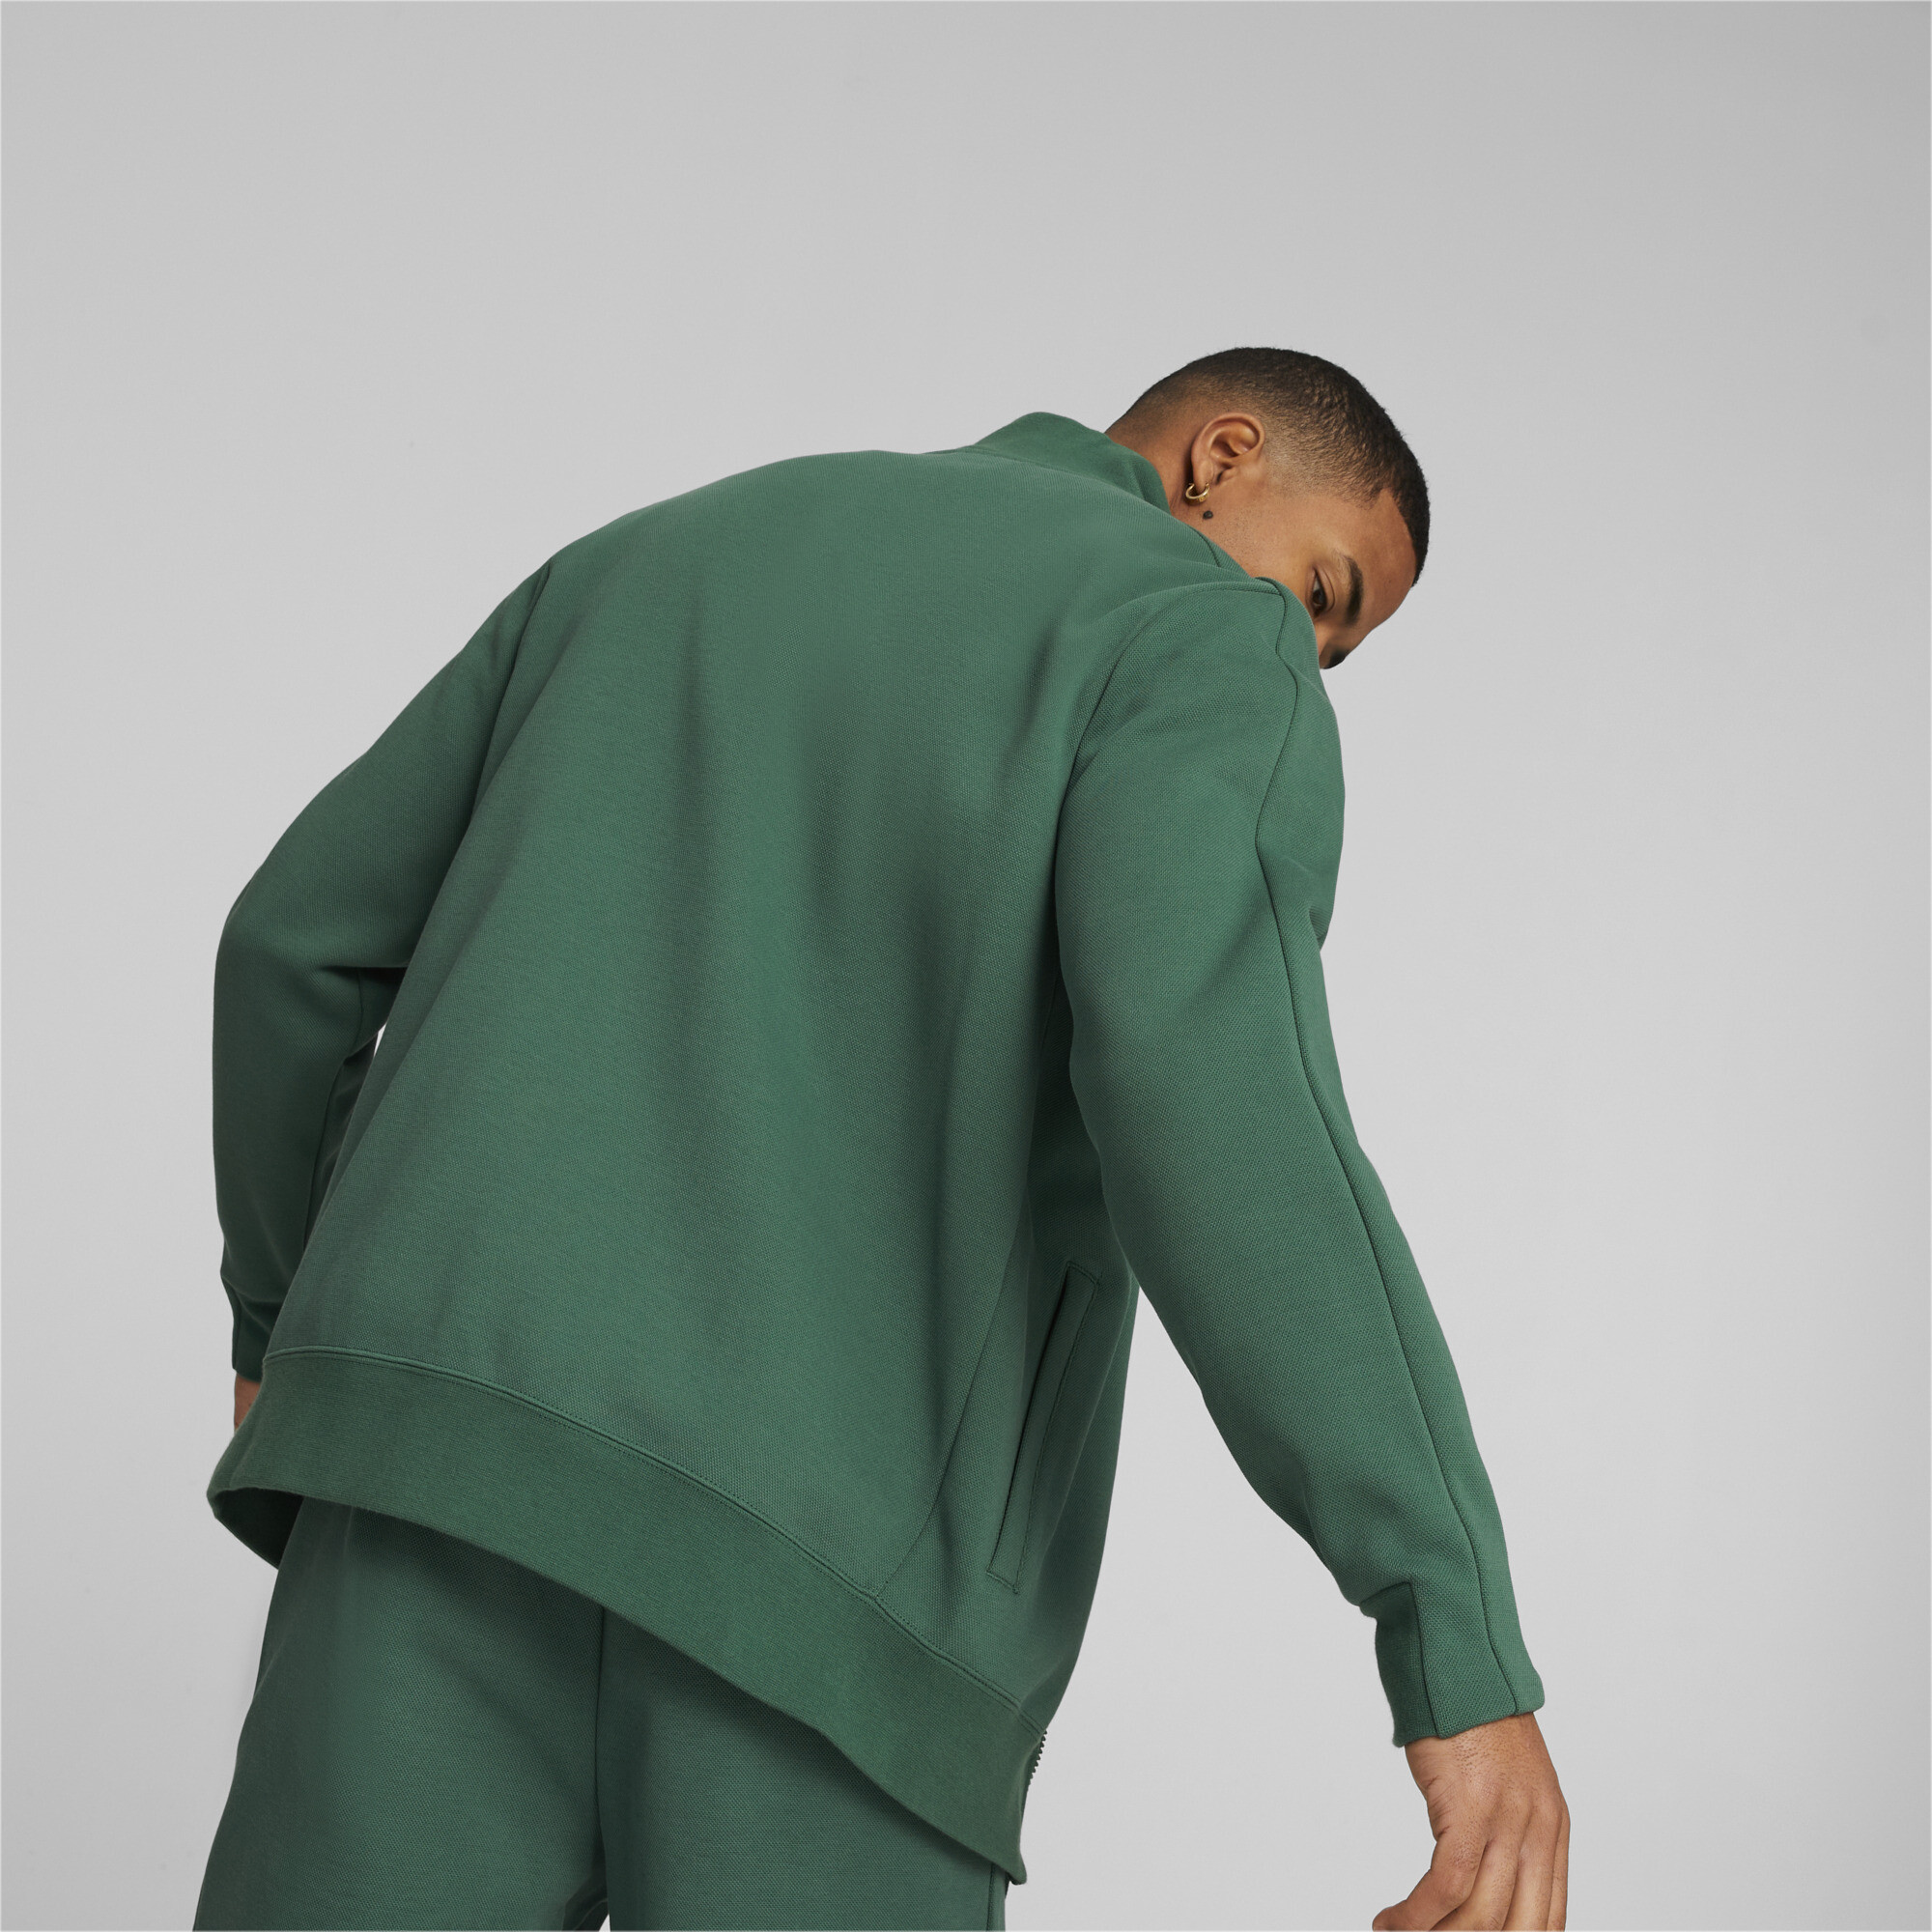 Men's PUMA T7 Track Jacket Men In Green, Size XS